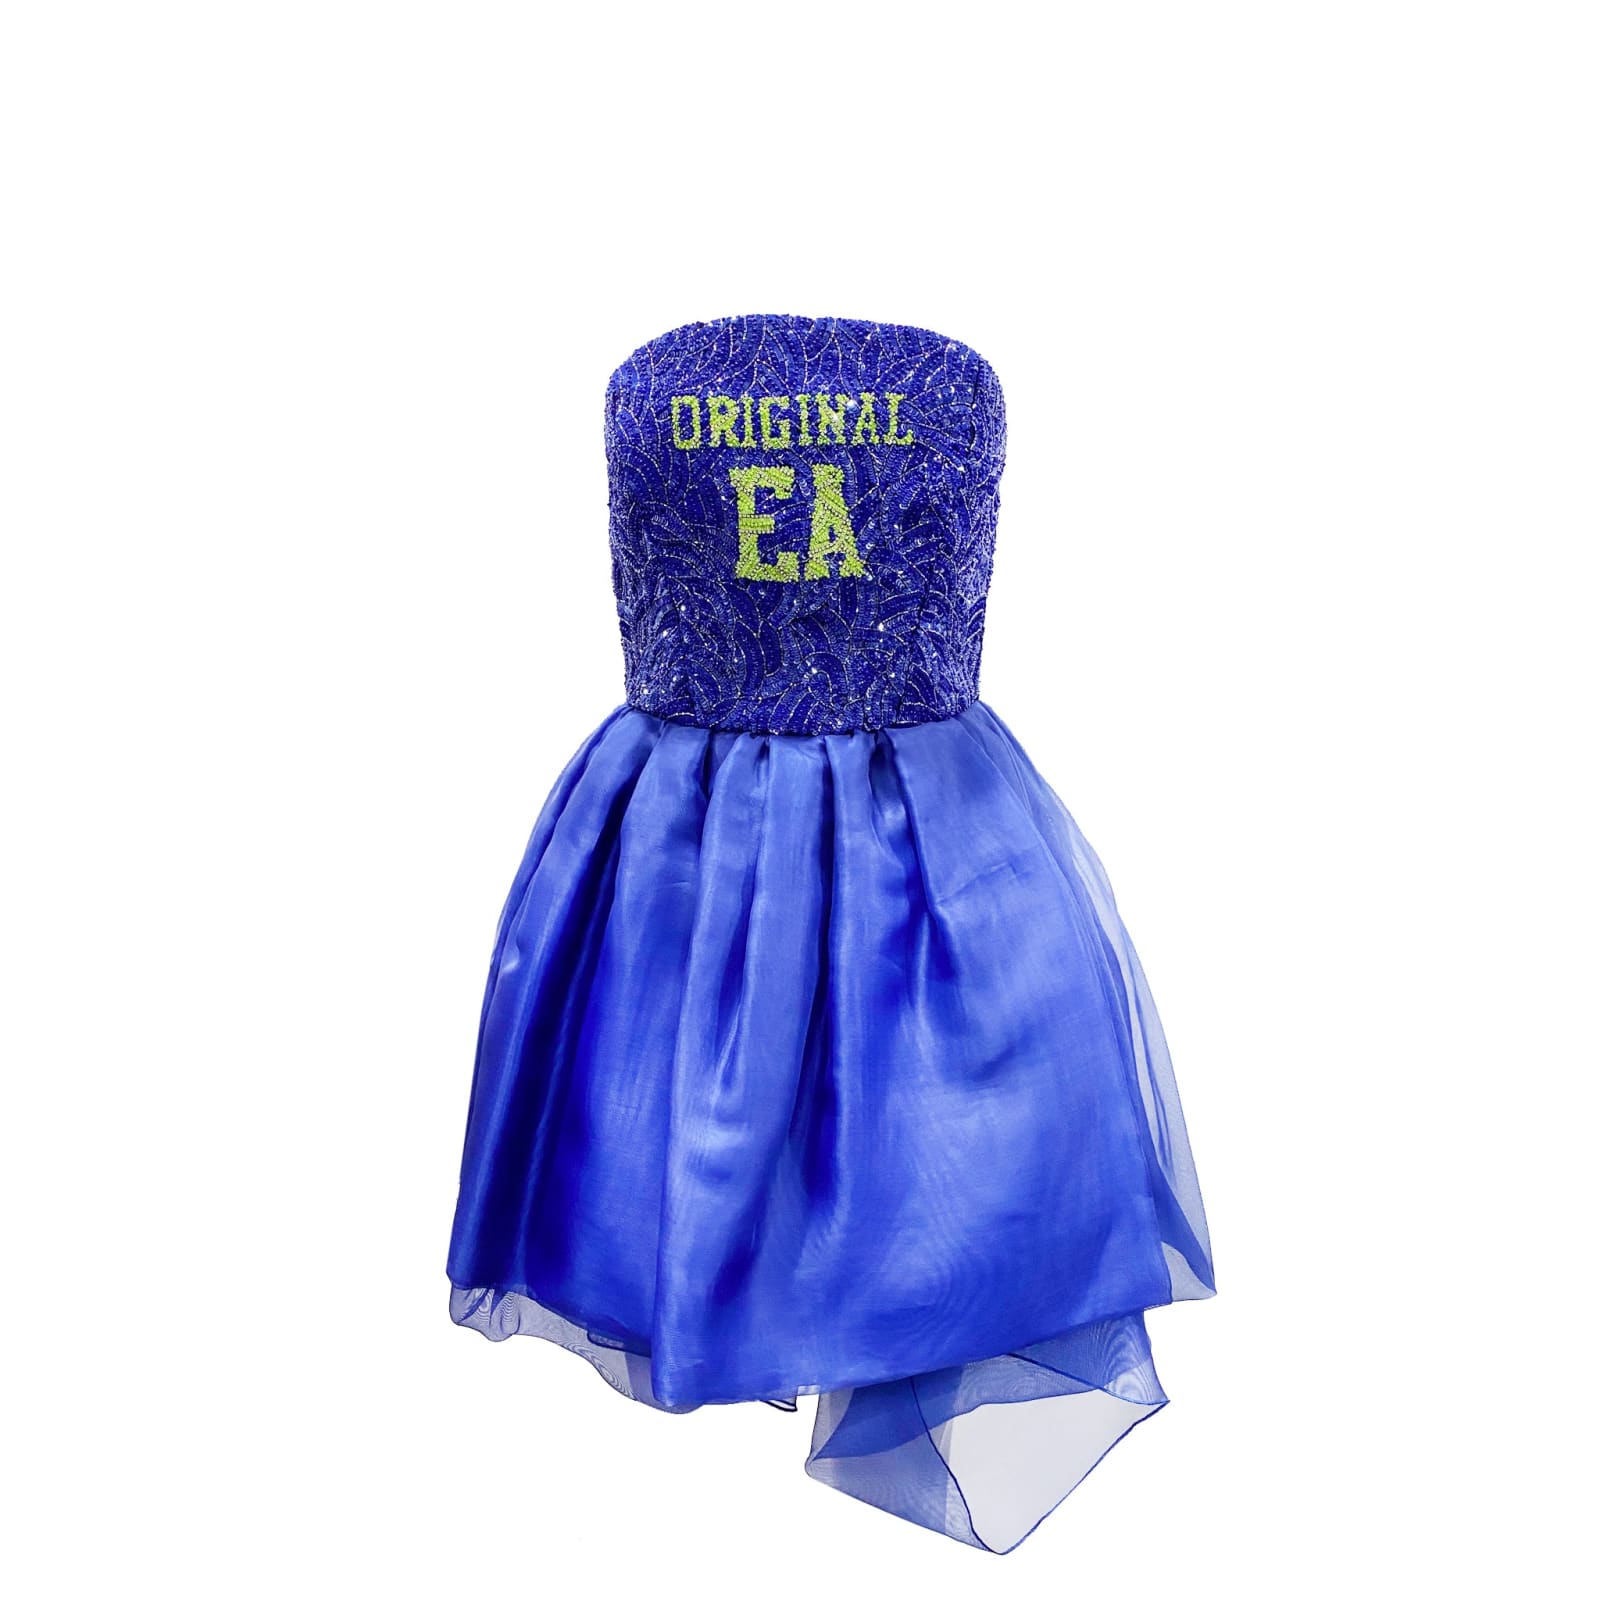 Emporio Armani Original Ea Mini Dress